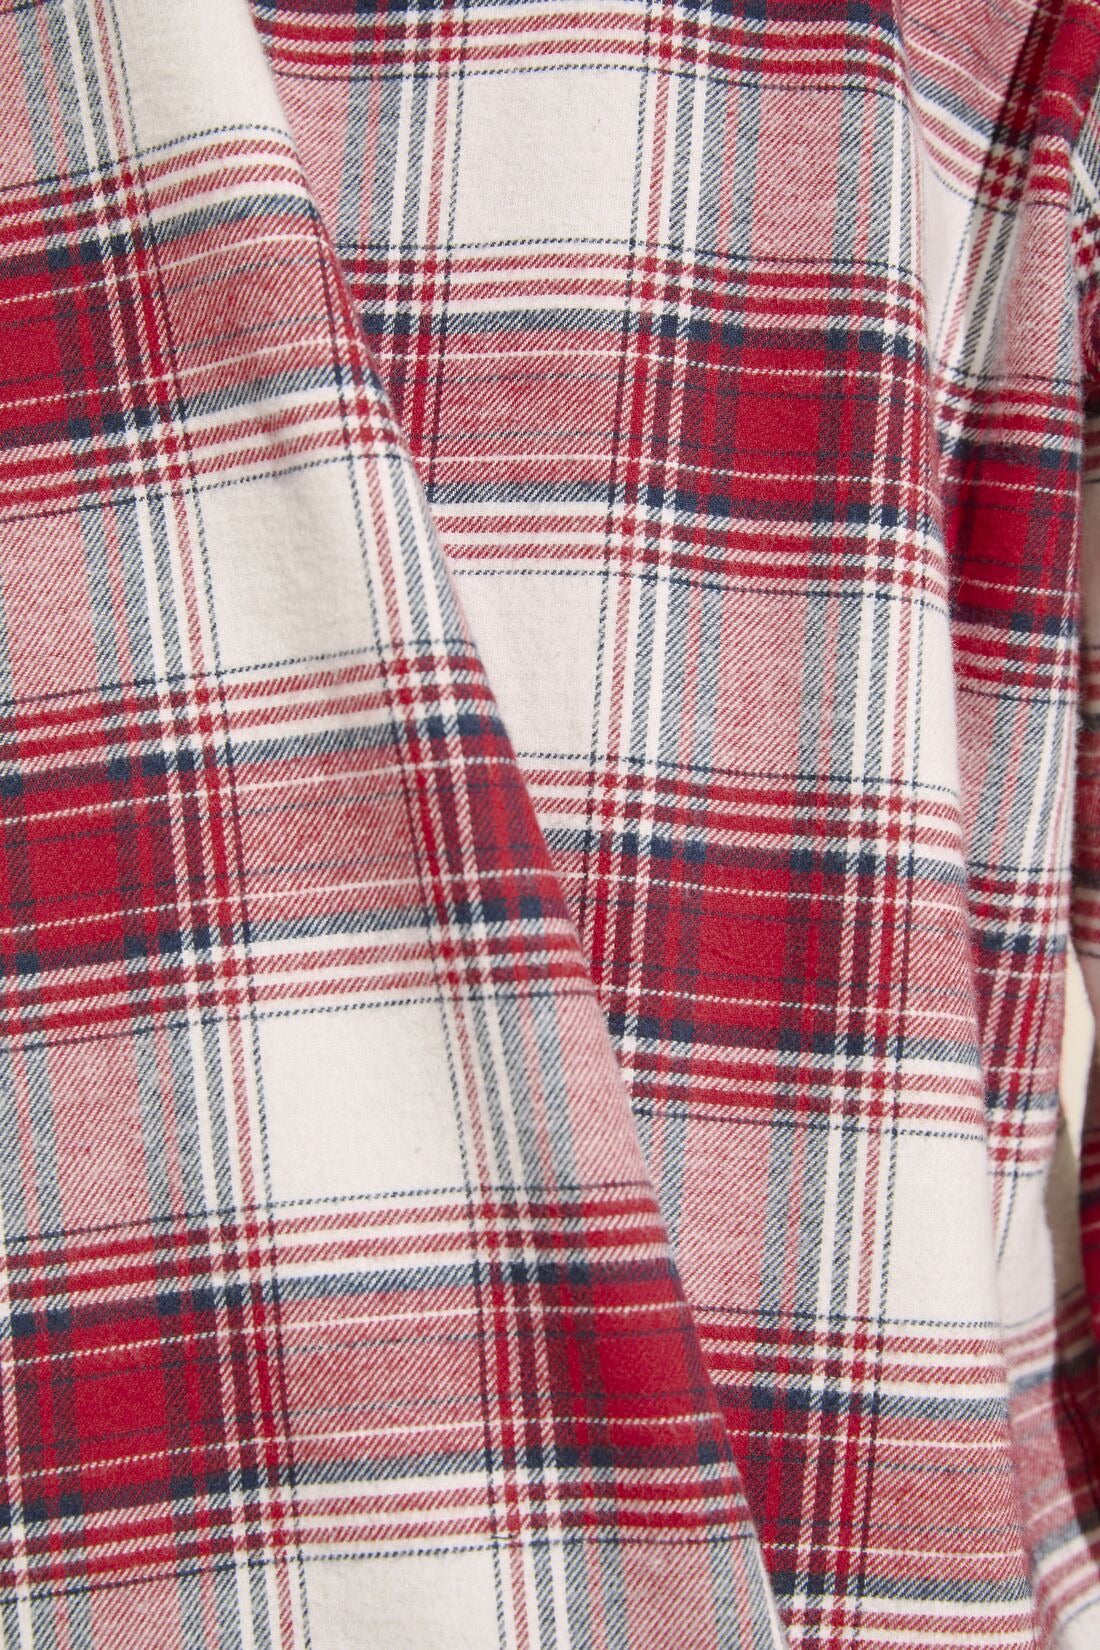 Eberjey Gisele Printed Flannel Long PJ Set - Red Plaid